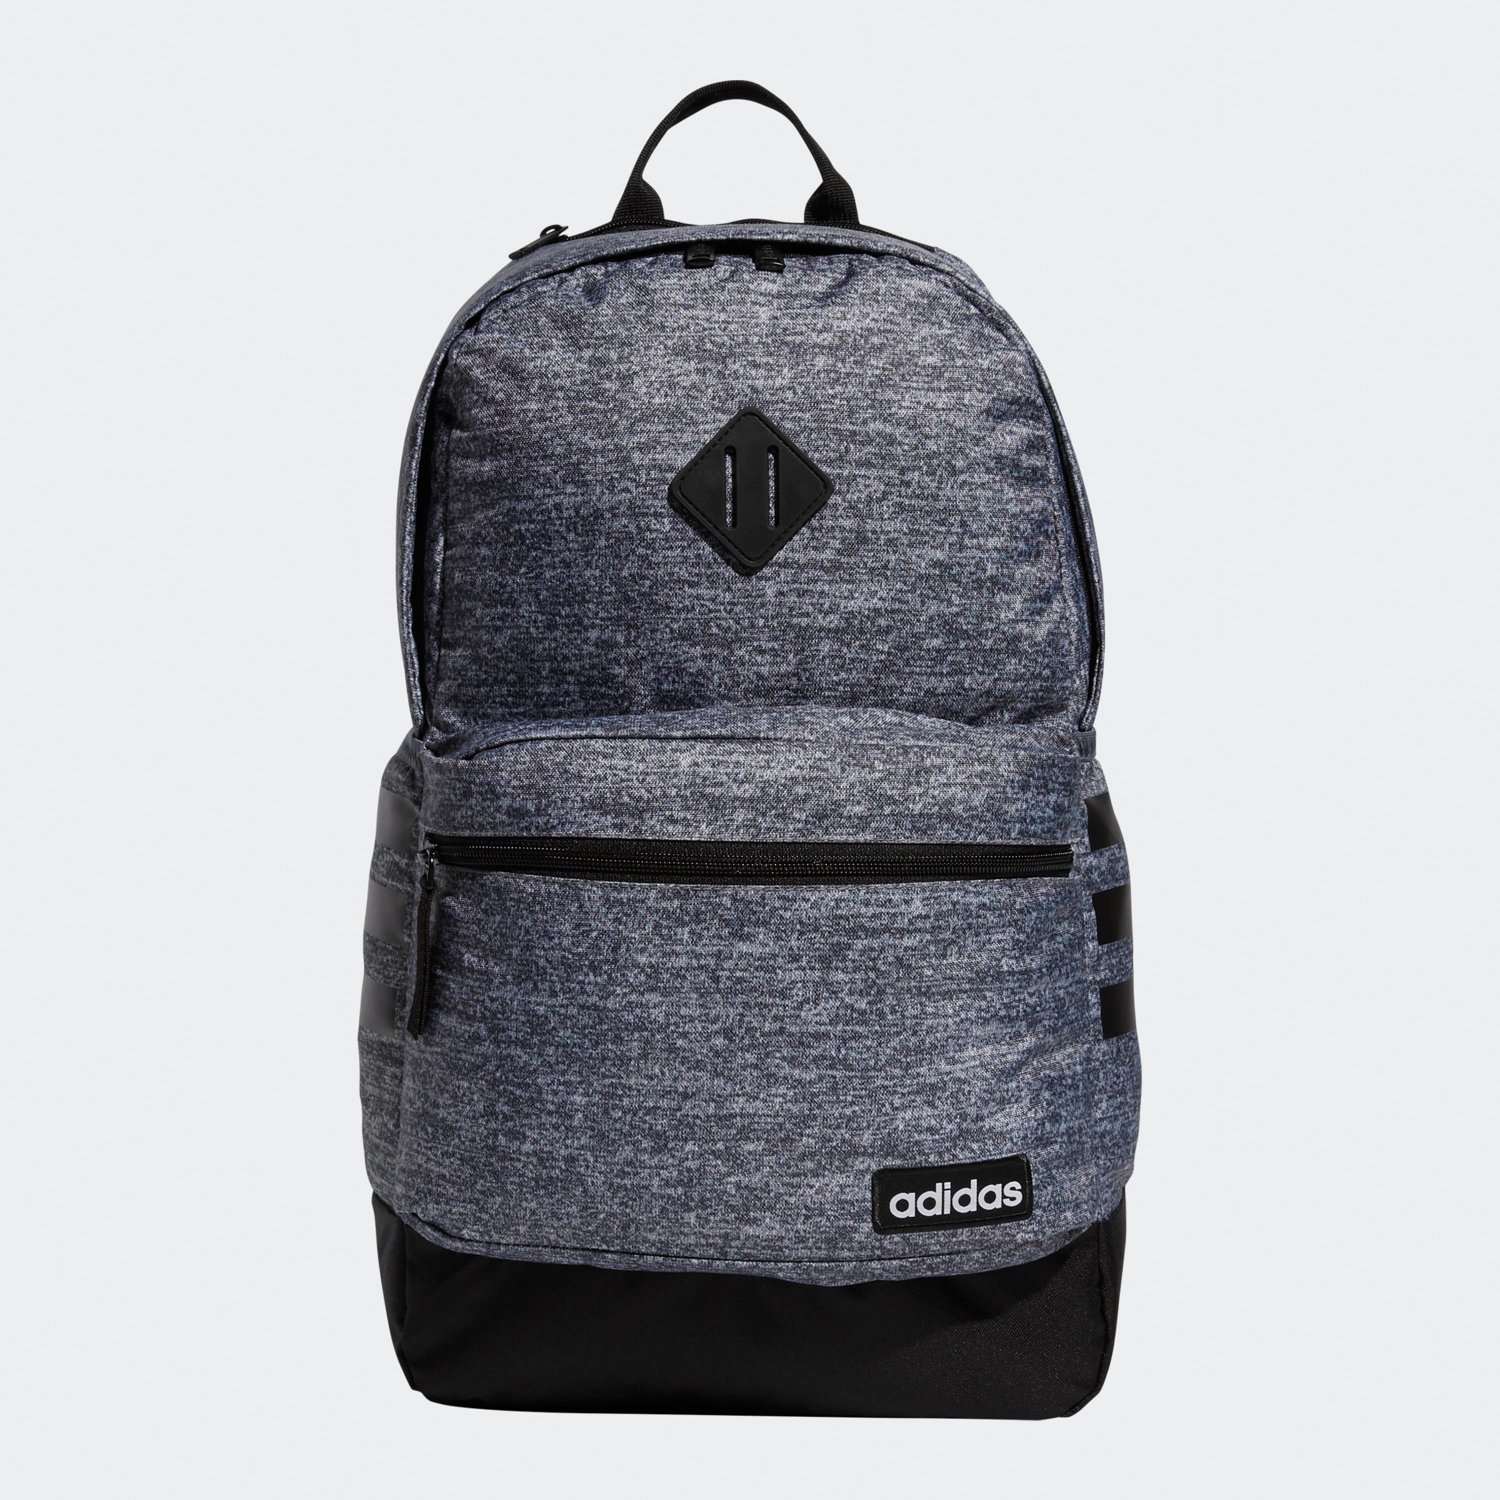 adidas backpack academy